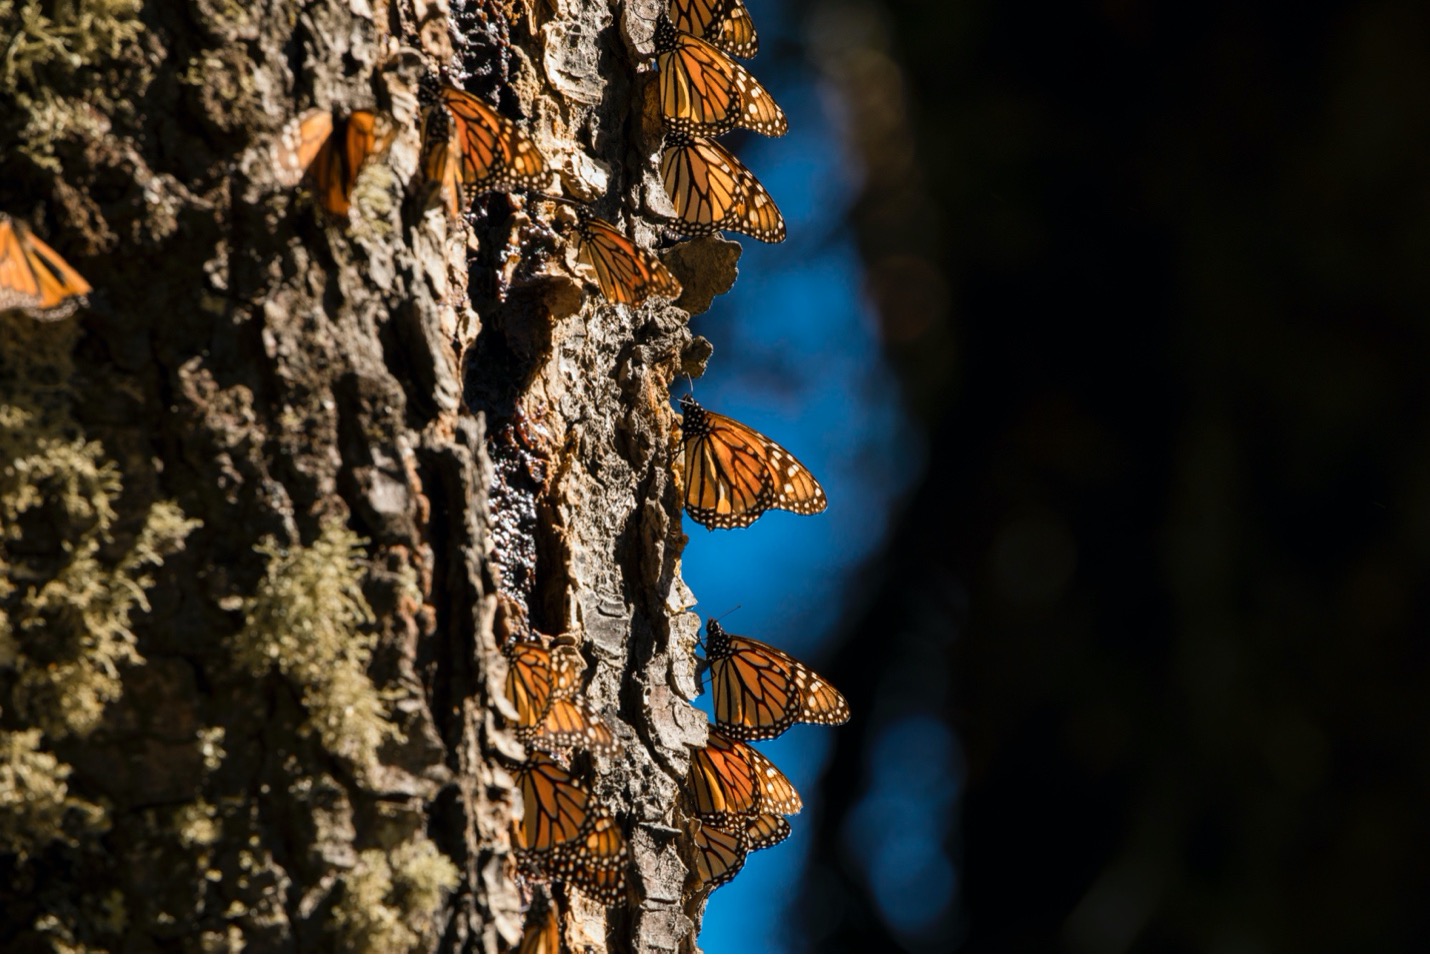 monarch butterflies perch on the side of a tree